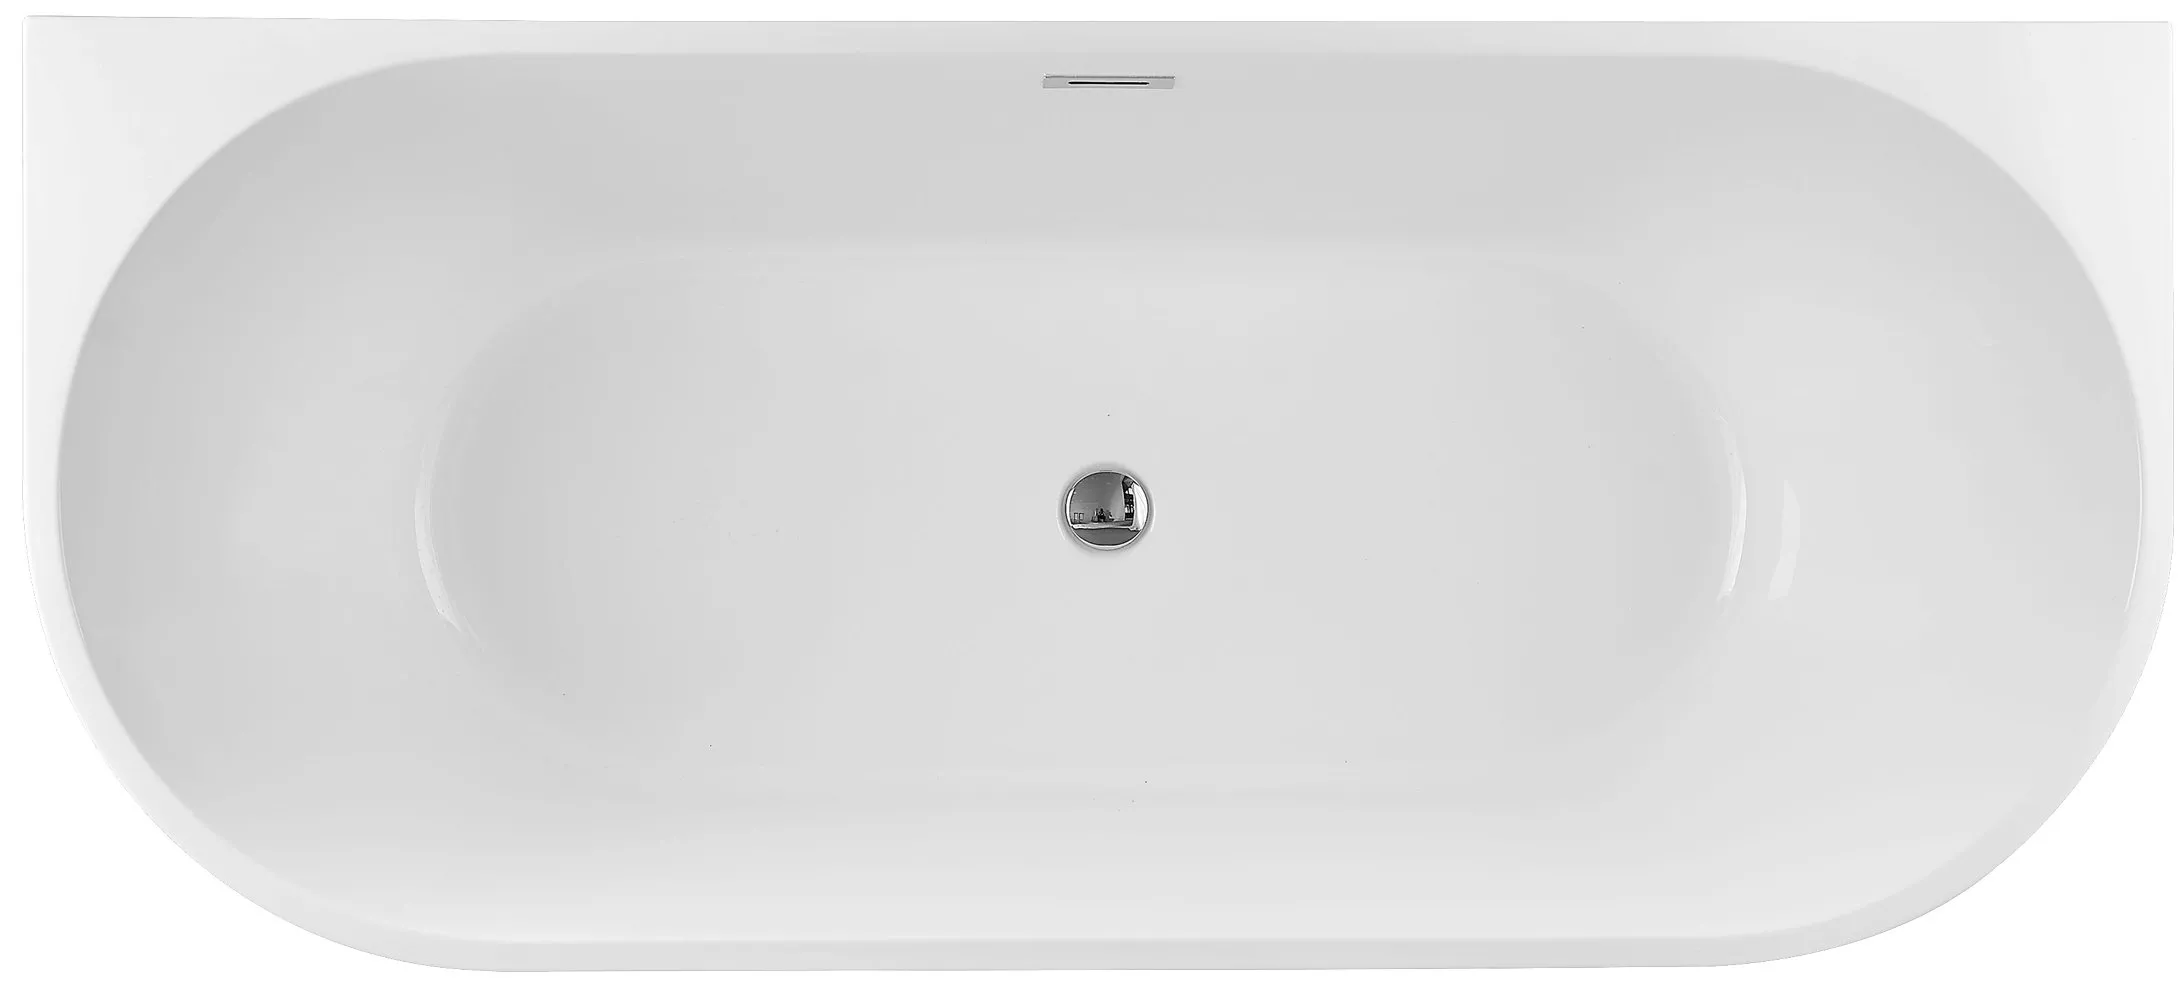 Акриловая ванна Swedbe Vita 8828, цвет белый - фото 1